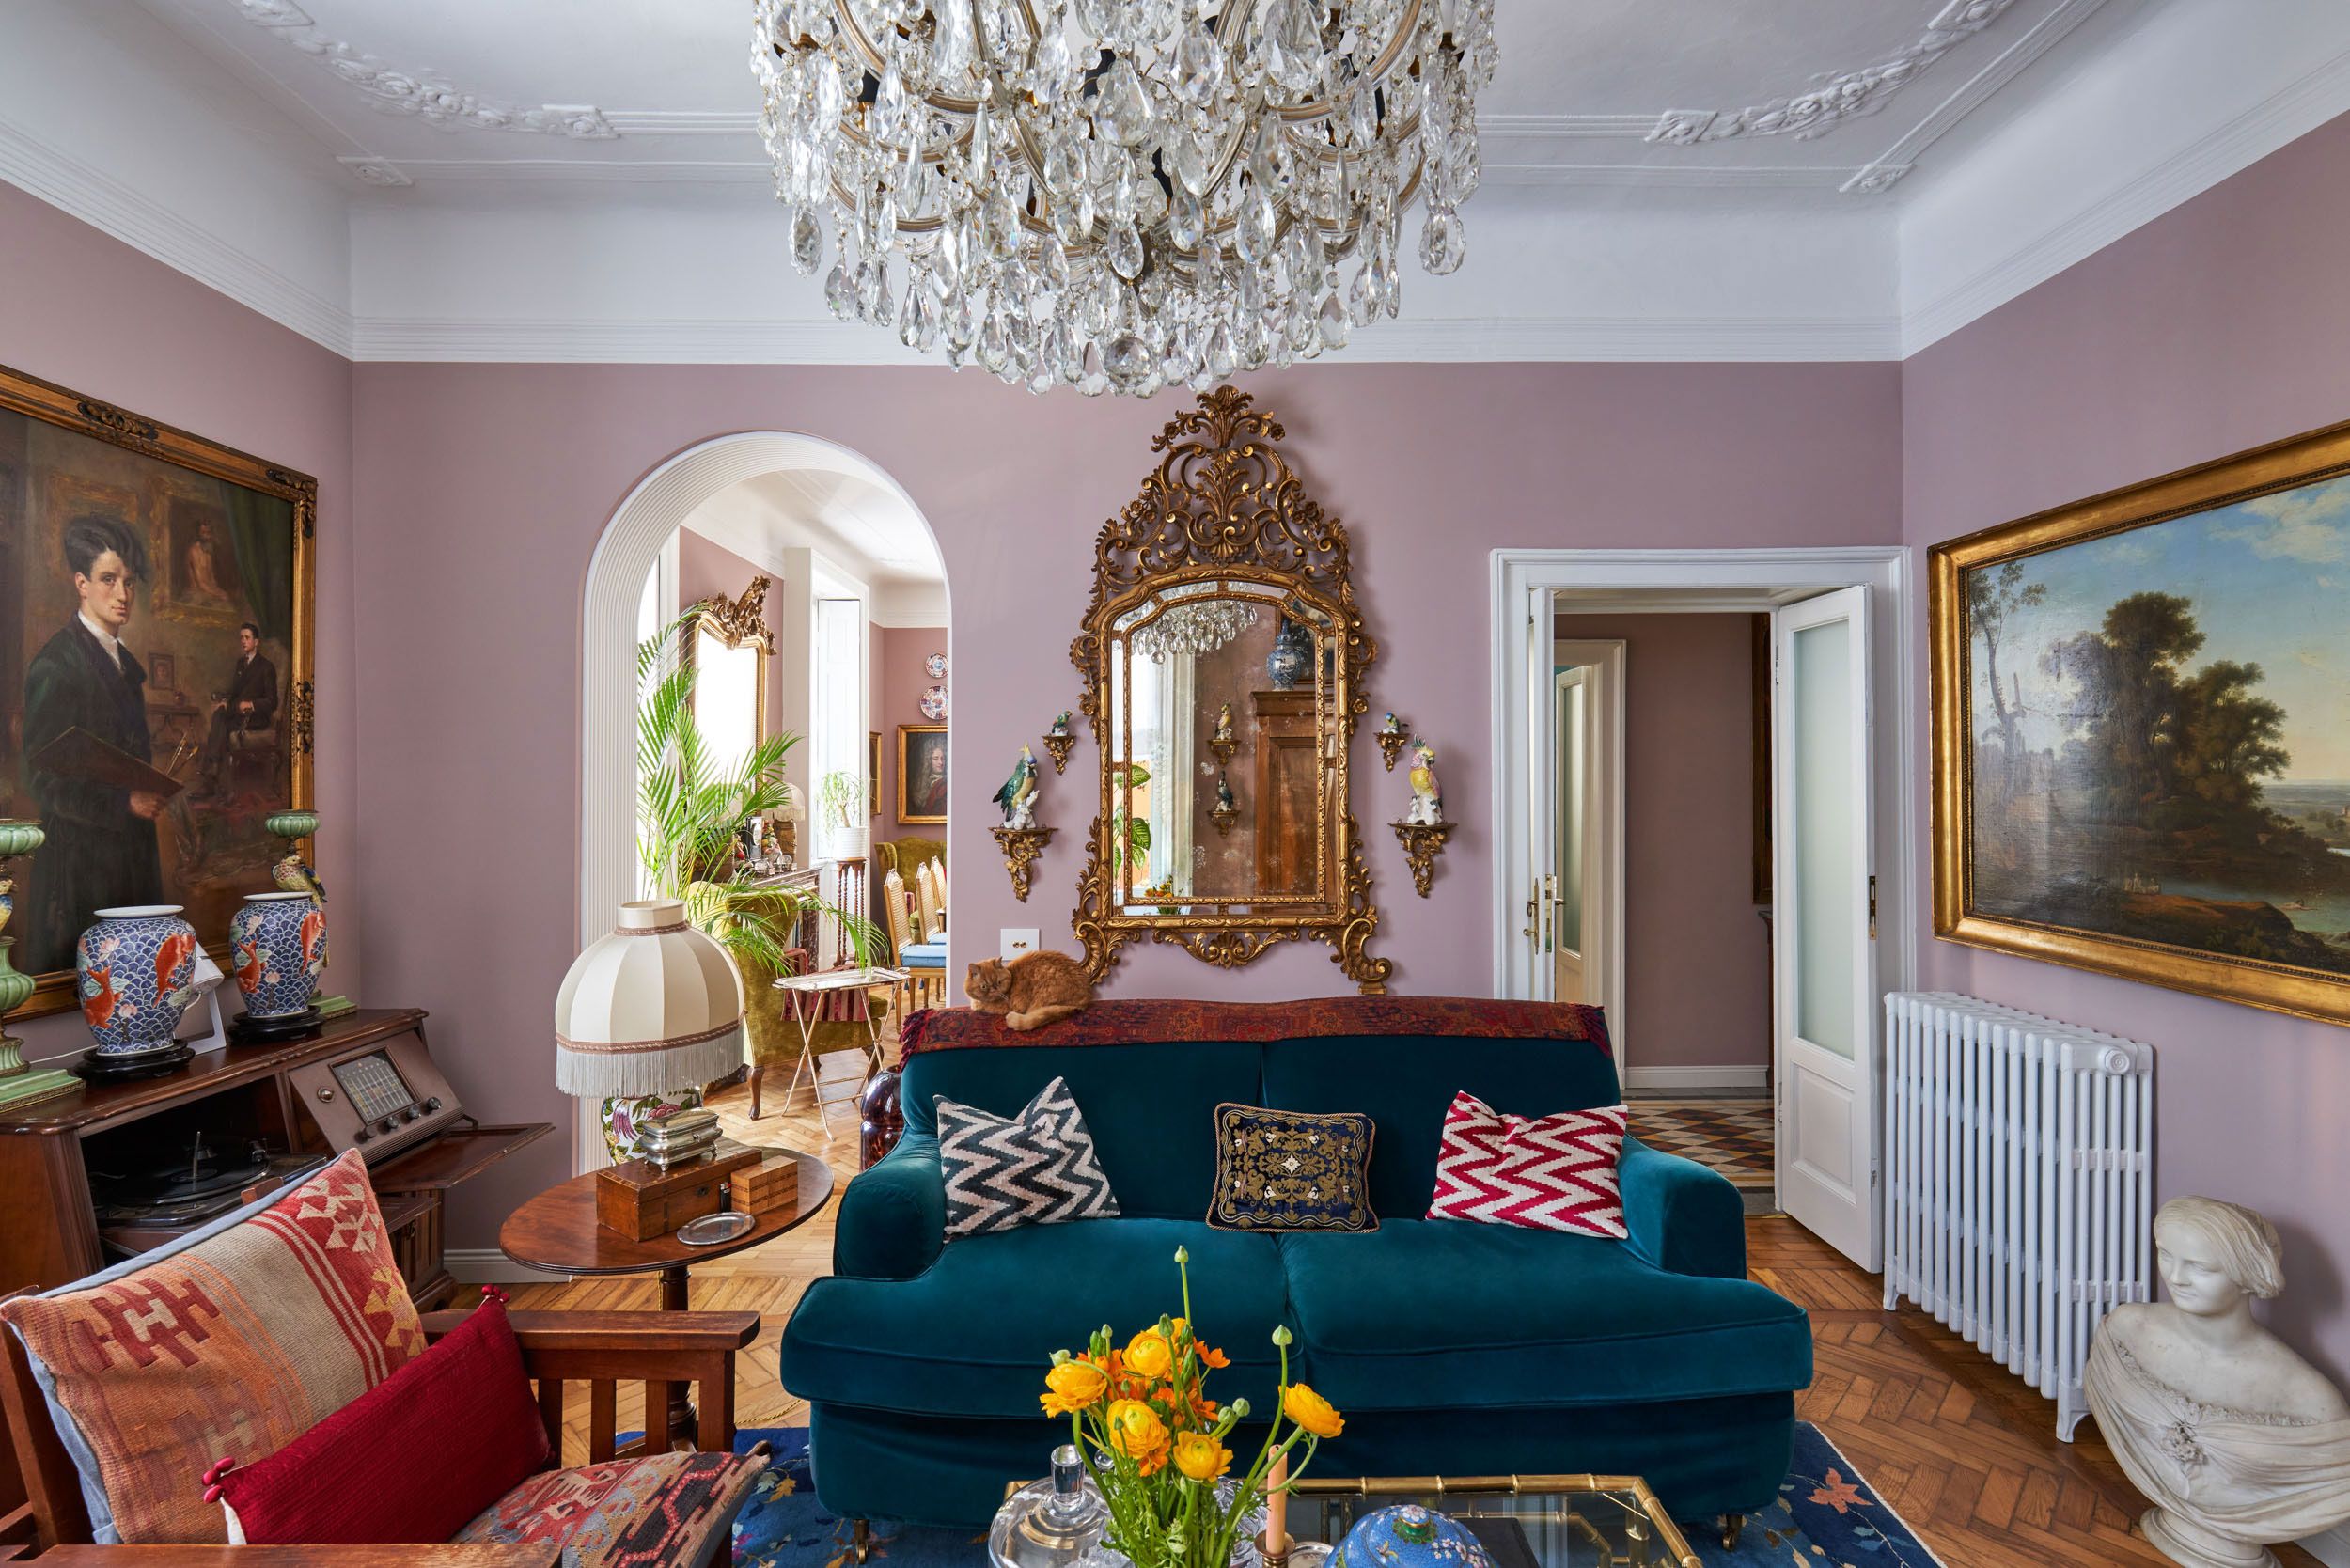 30 Living Room Color Ideas - Best Paint & Decor Colors For Living Rooms